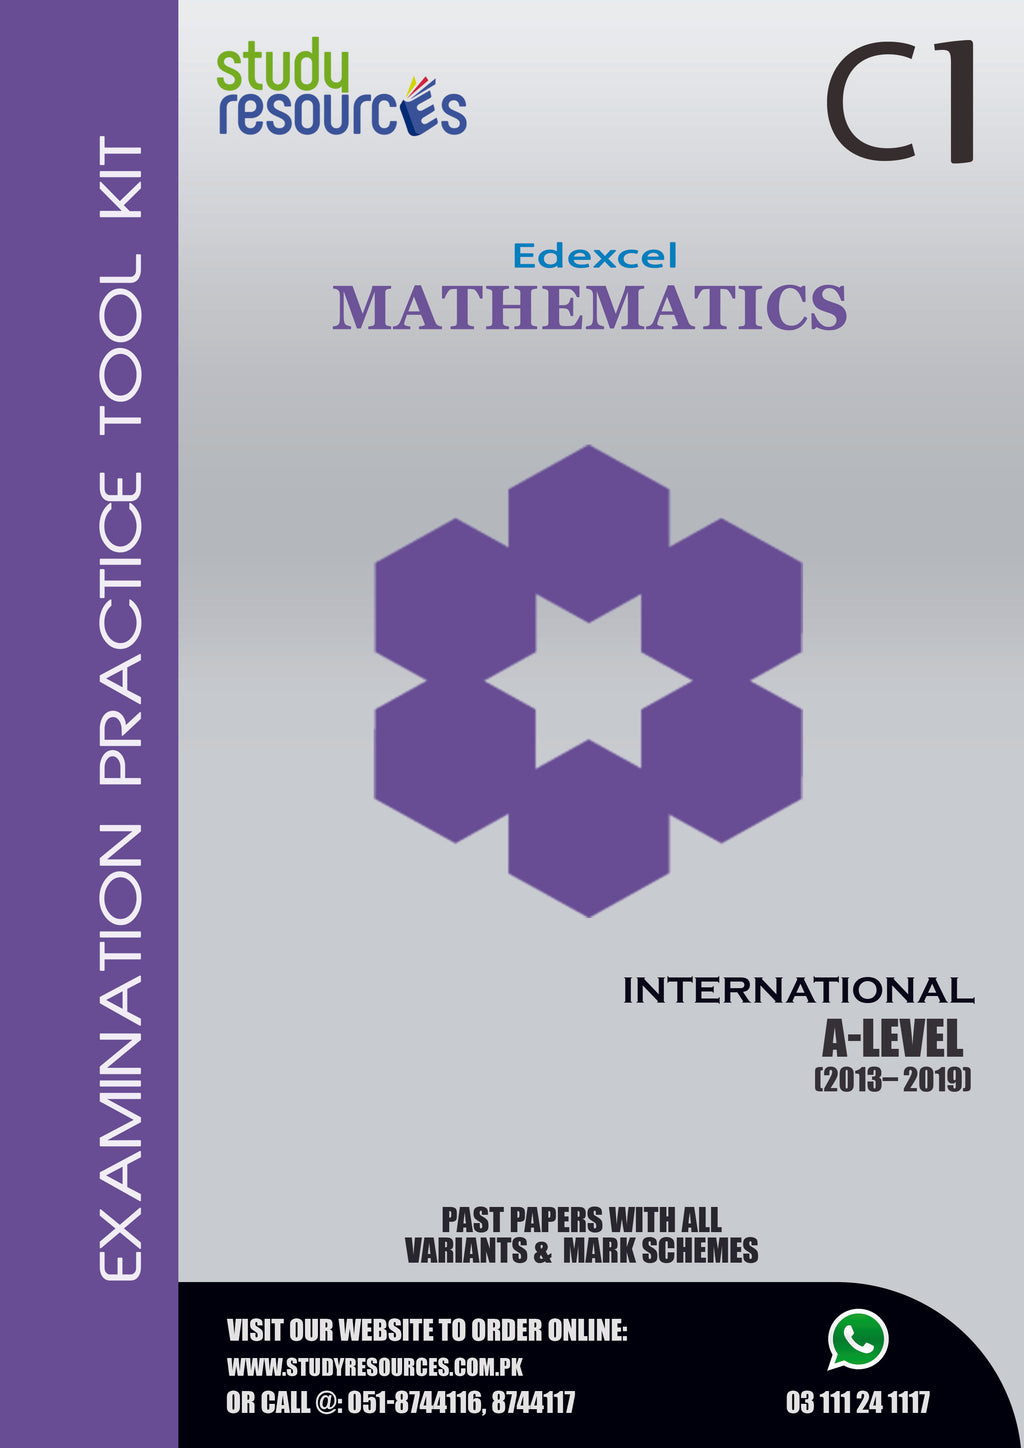 Edexcel A-Level Mathematics C-1 Past Papers (2013-2019)